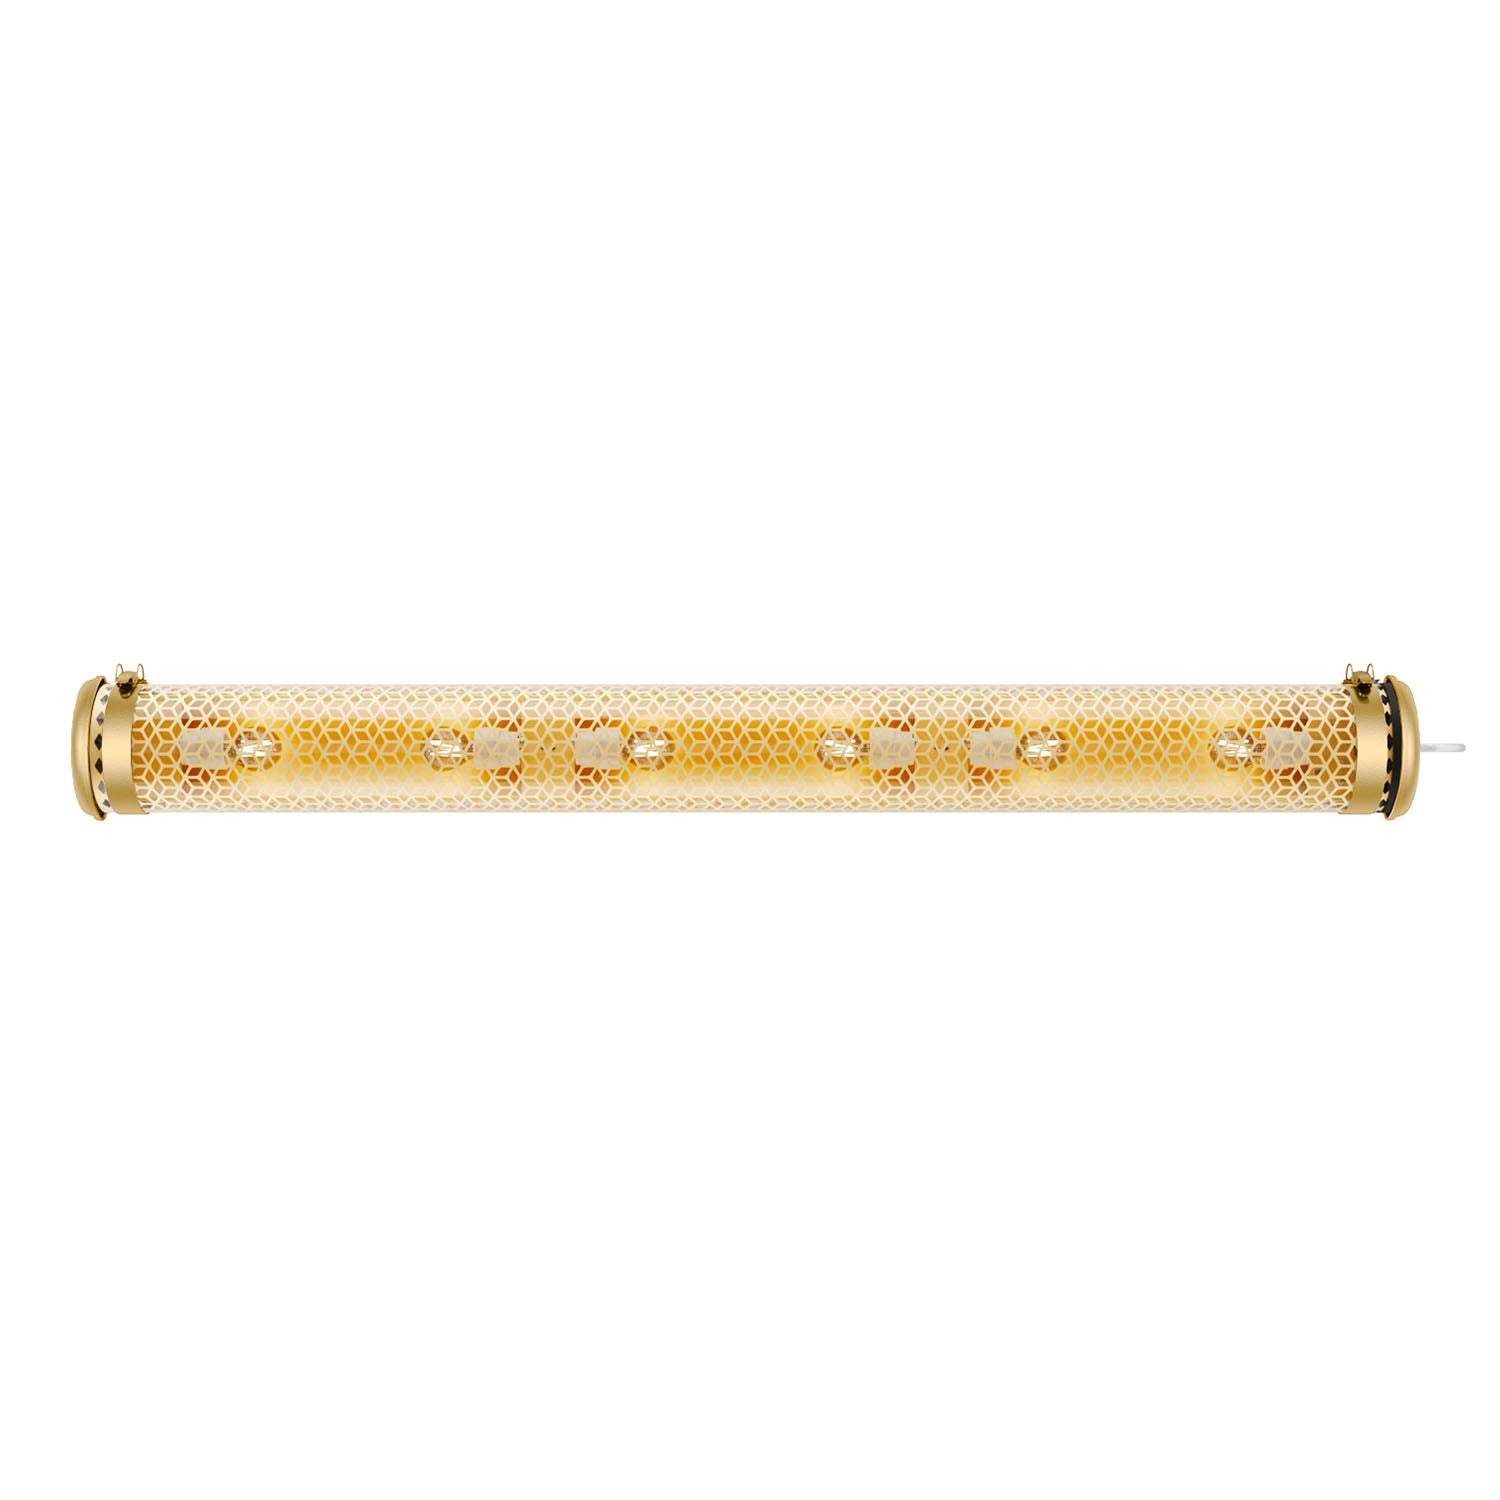 VENDOME - IP68 waterproof industrial style gold tube pendant light